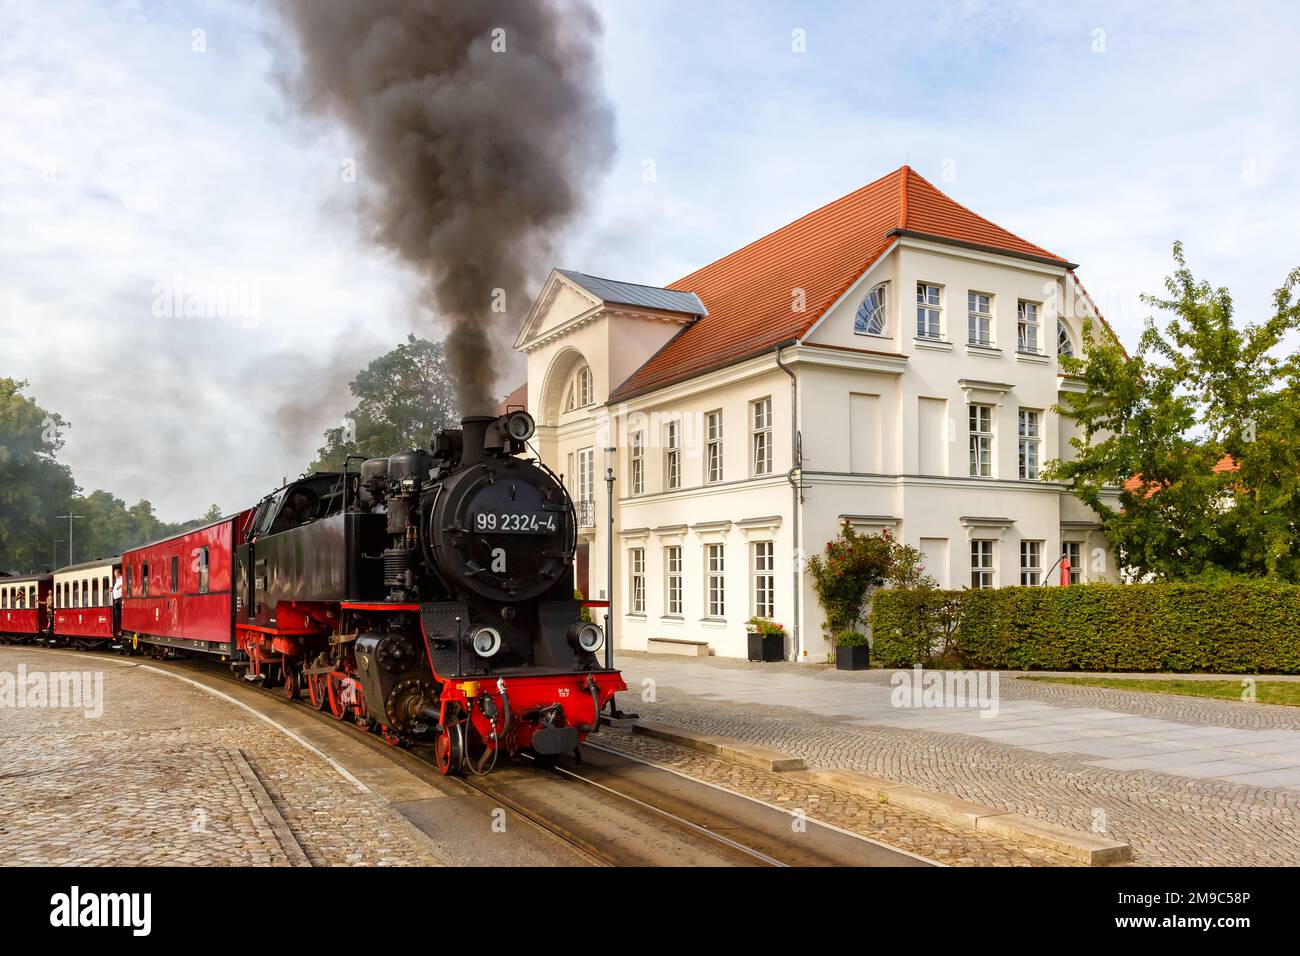 Baederbahn Molli steam train locomotive railway rail in Bad Doberan, Germany Stock Photo